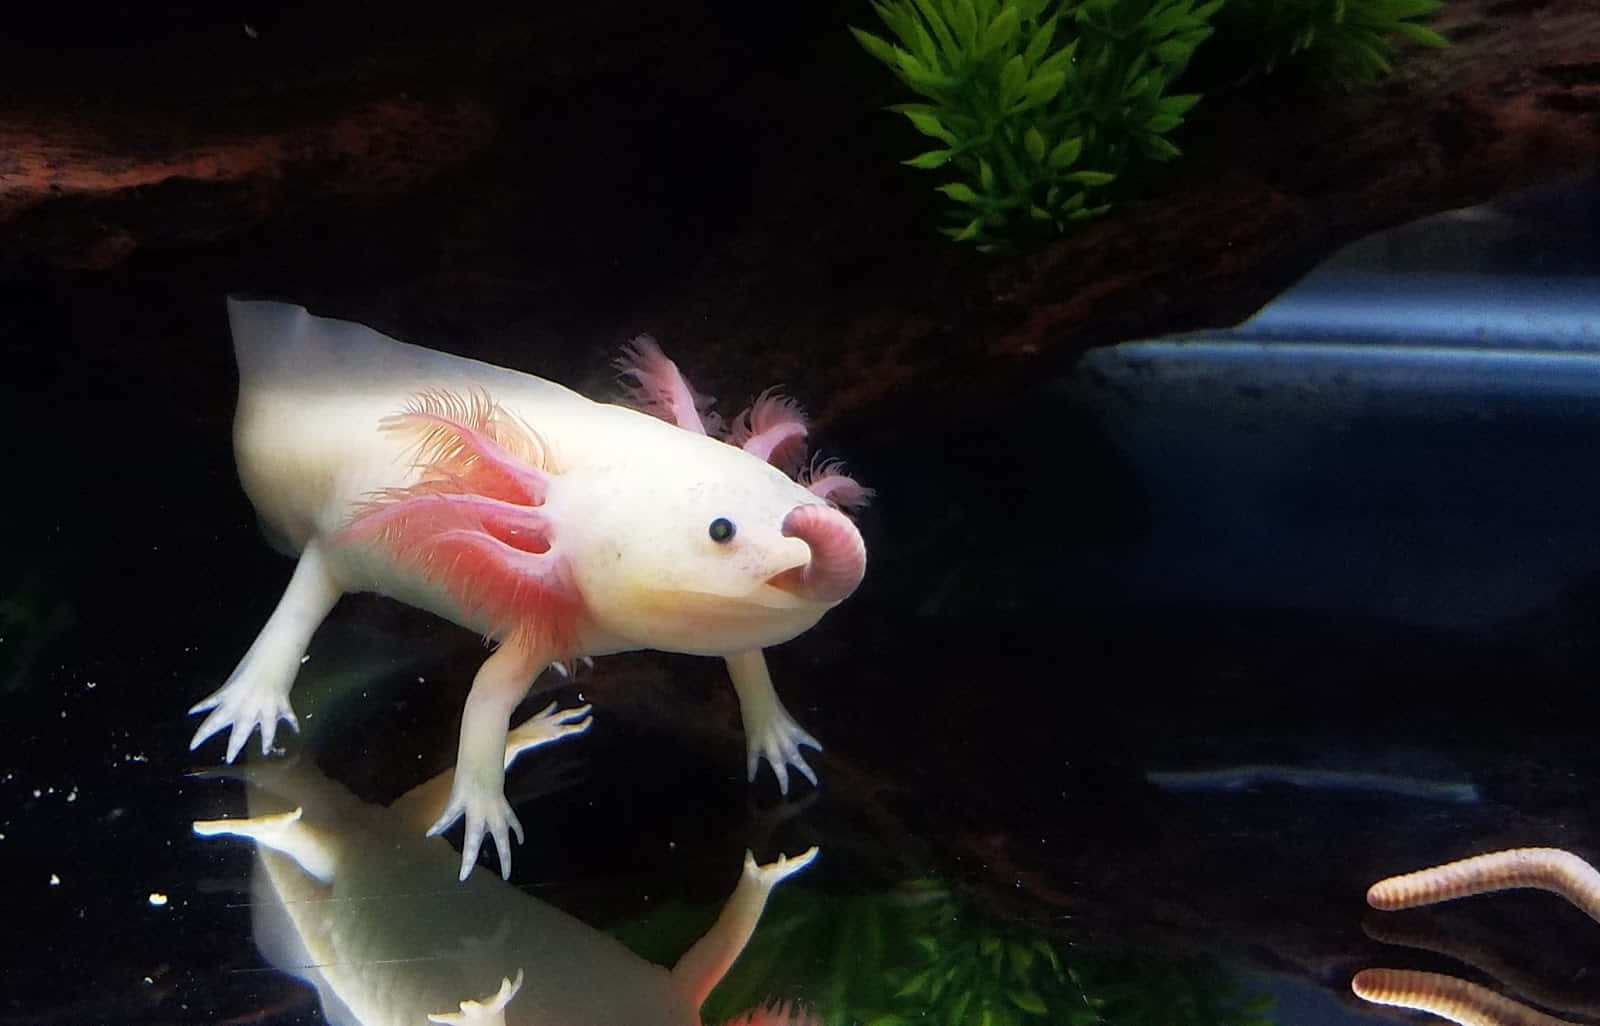 Say hello to Axolotl - the unique amphibian species